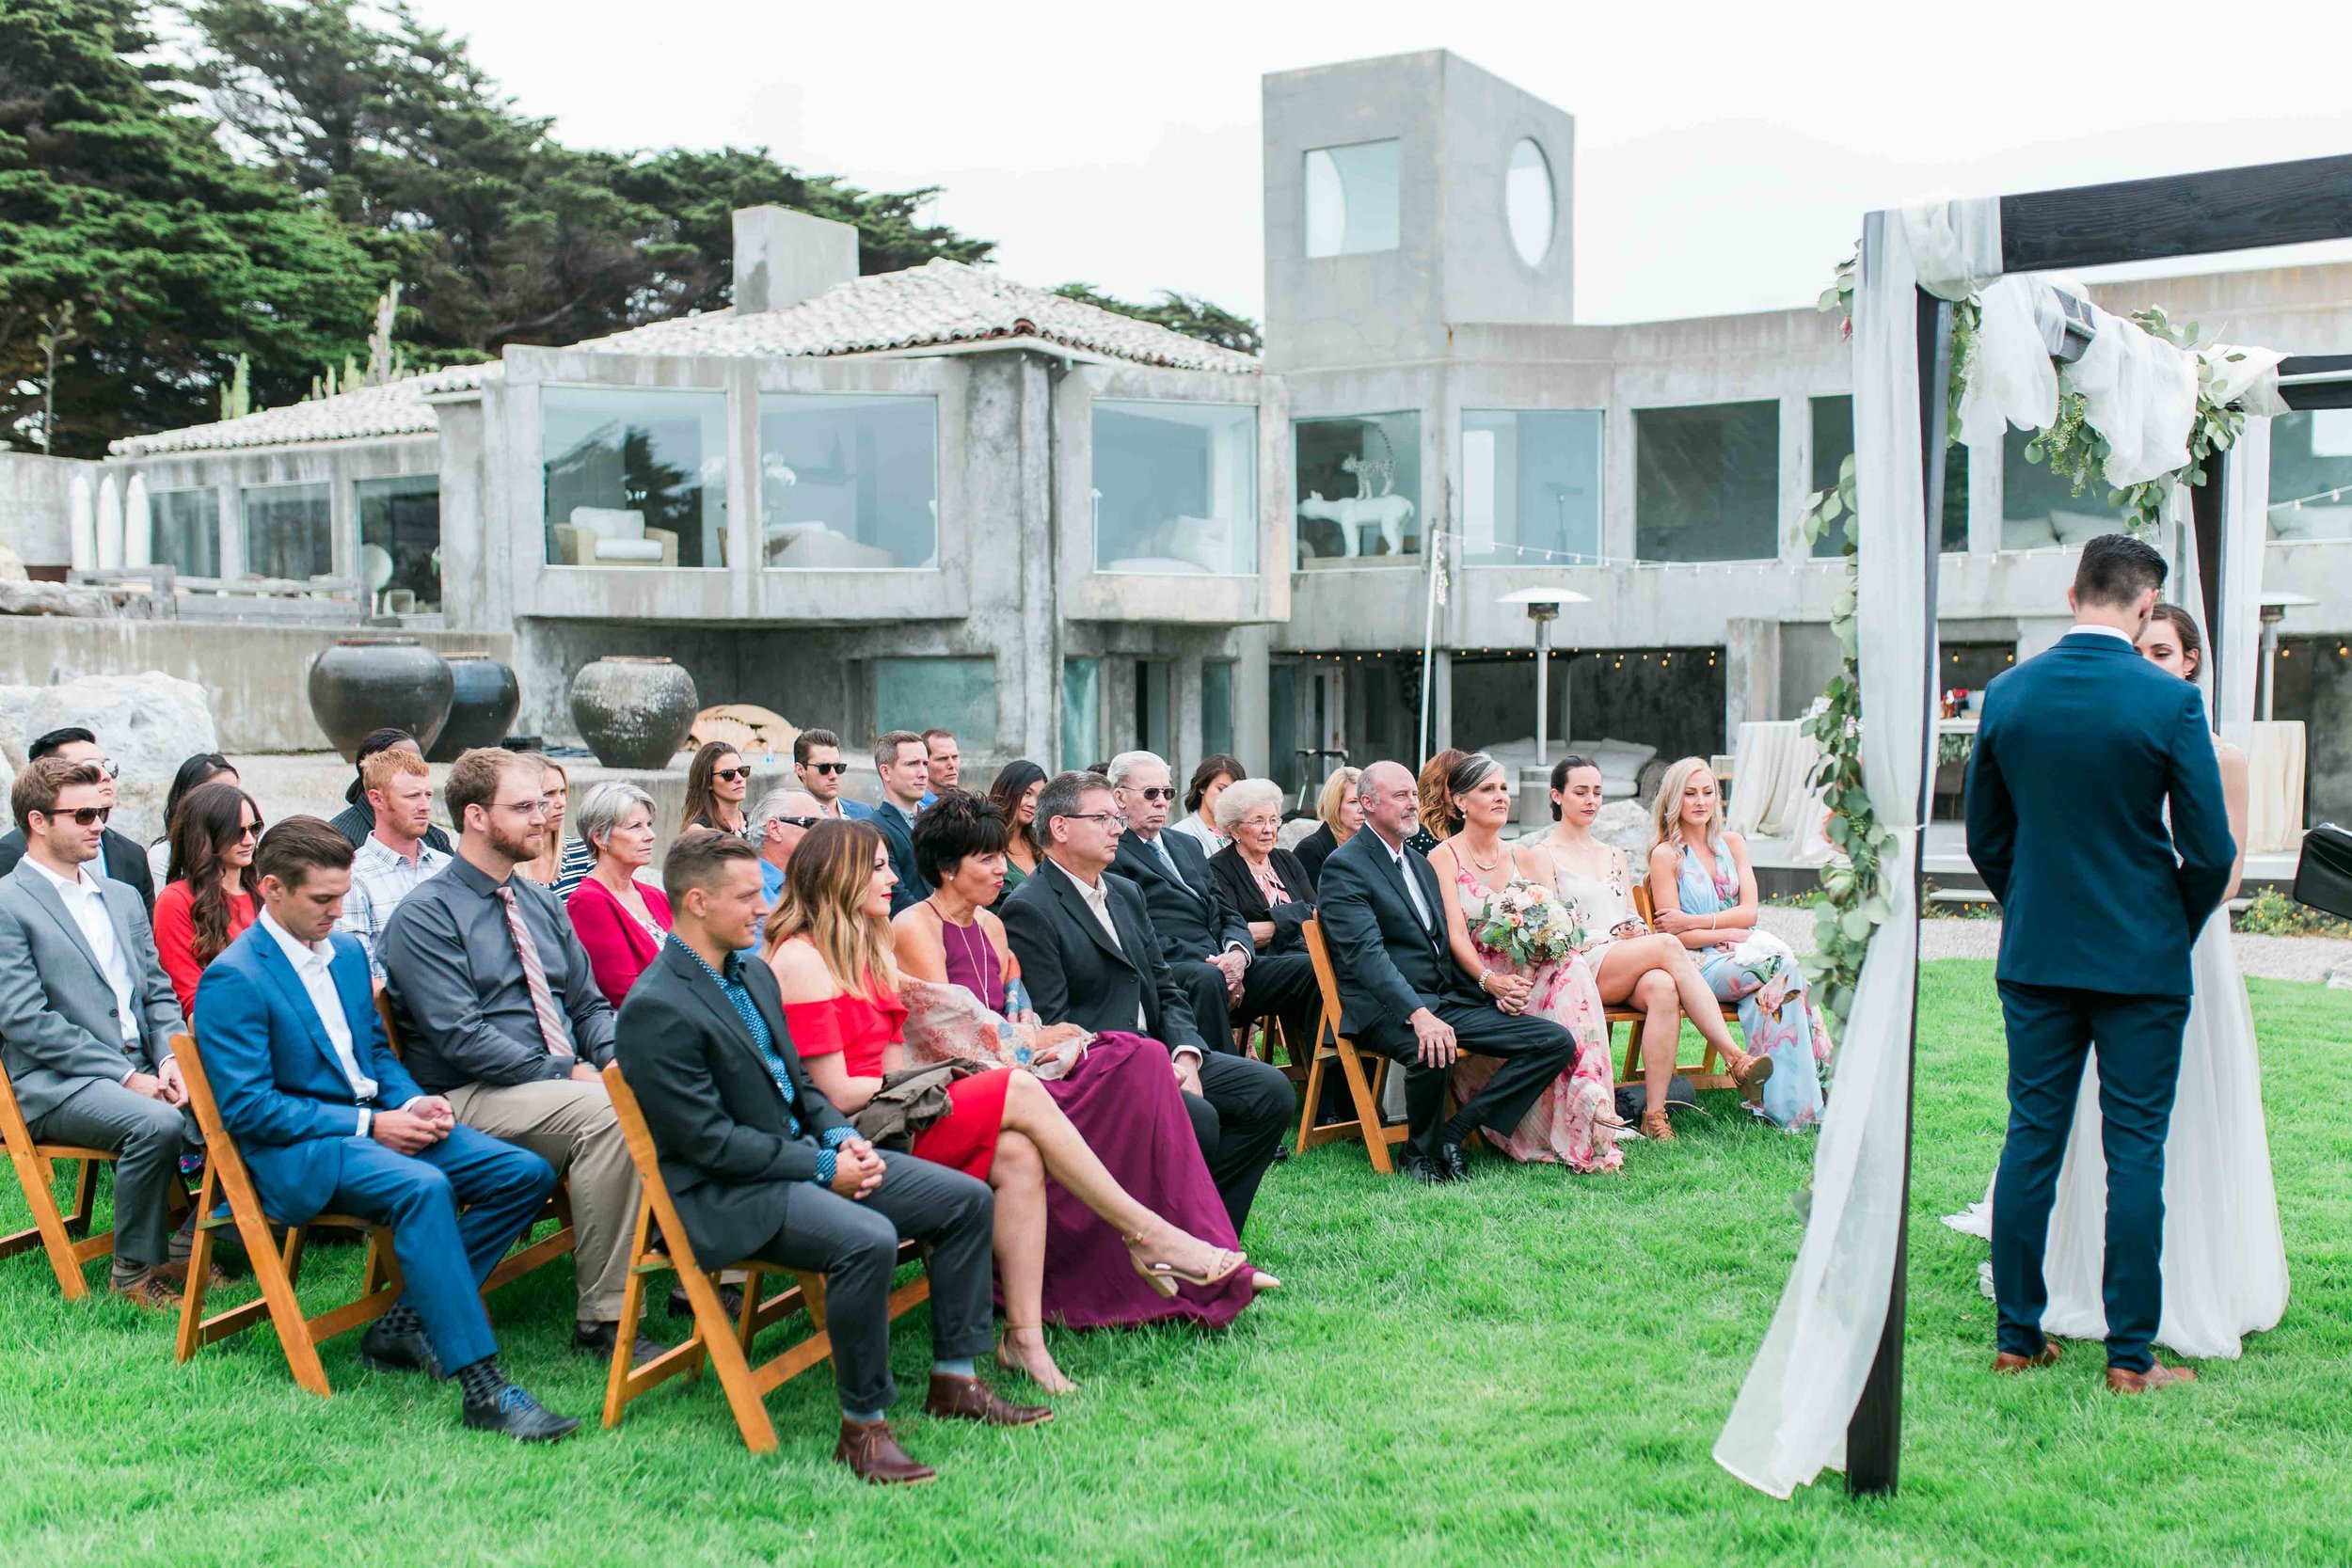 Villa Montara Wedding Photos by JBJ Pictures - San Francisco Napa Sonoma Wedding Photographer (30).jpg